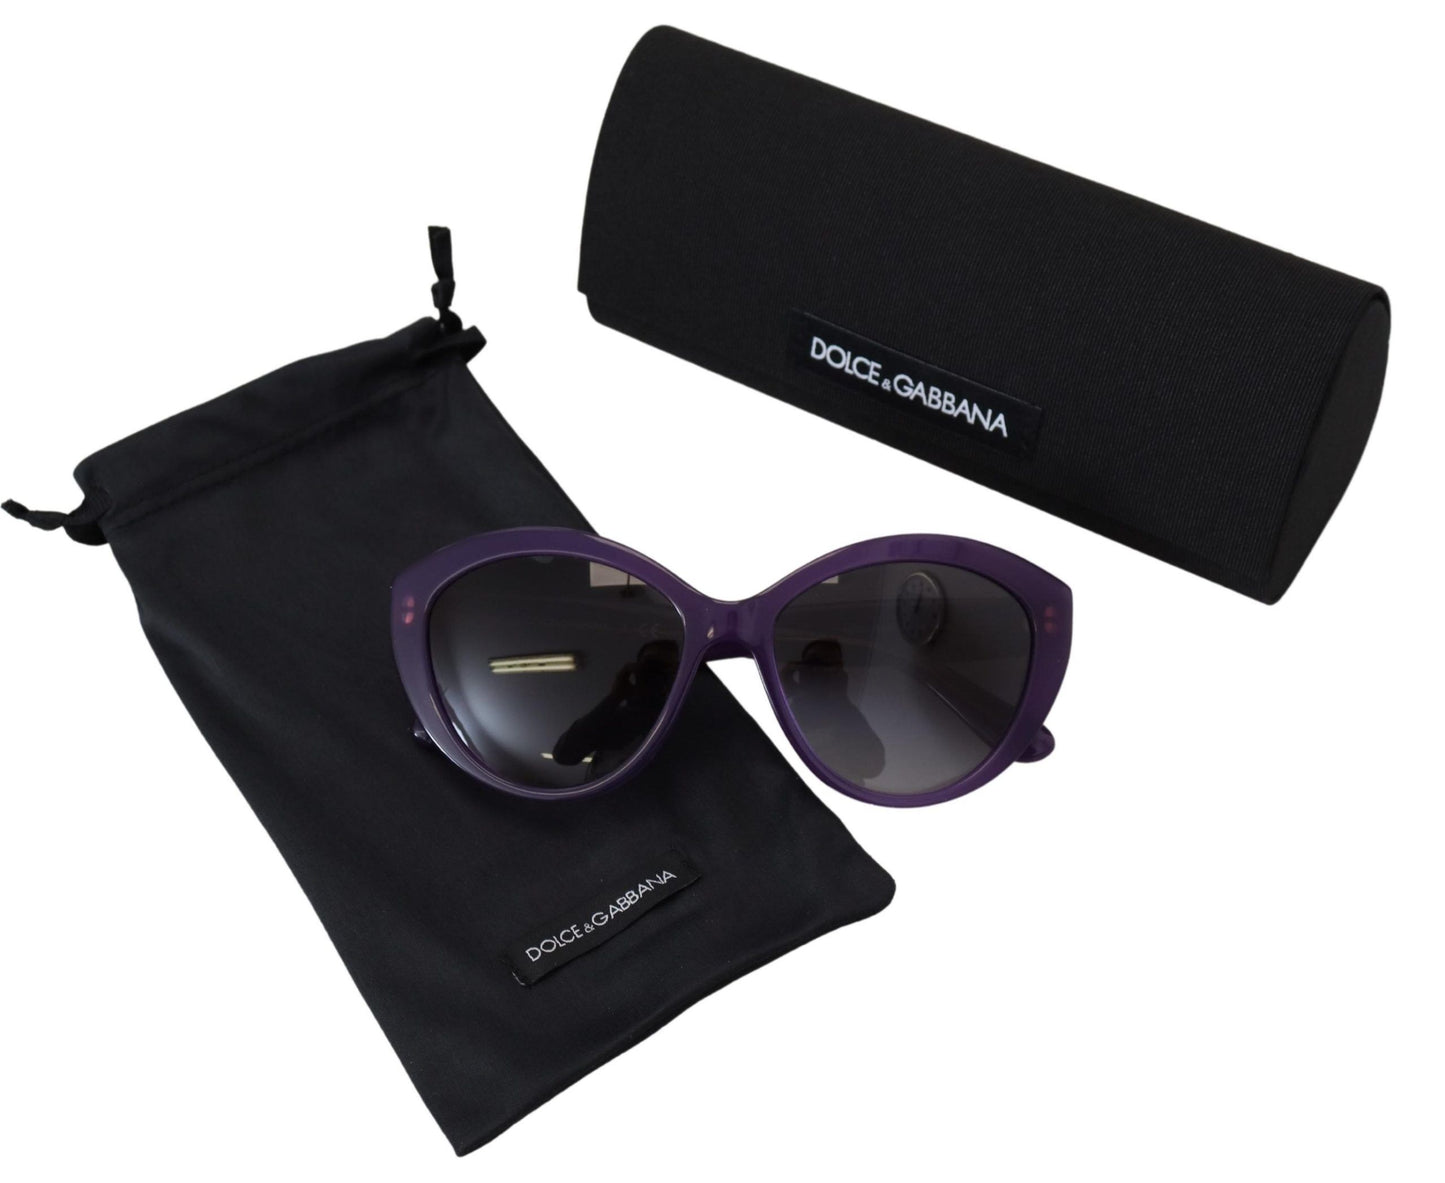 Chic Purple Cat-Eye Designer Sunglasses